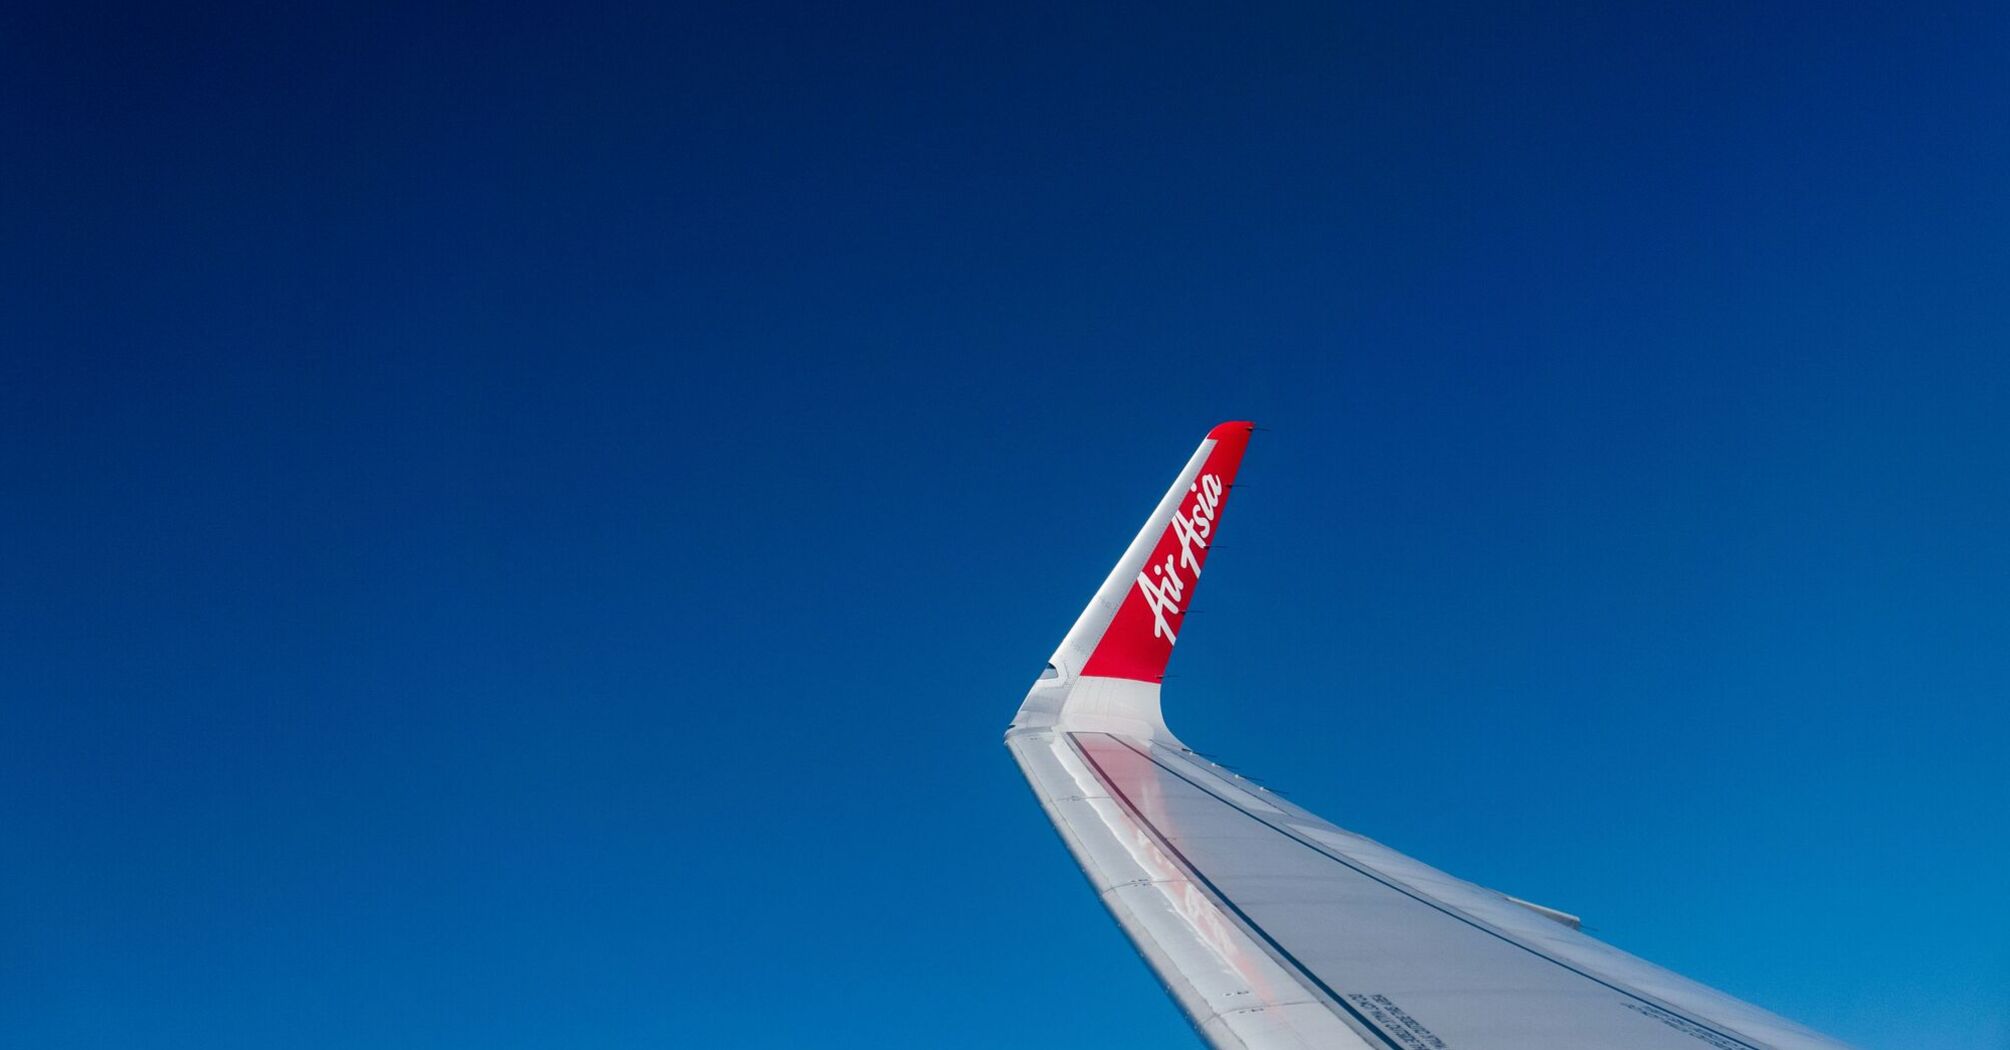 An AirAsia airplane wing against a clear blue sky